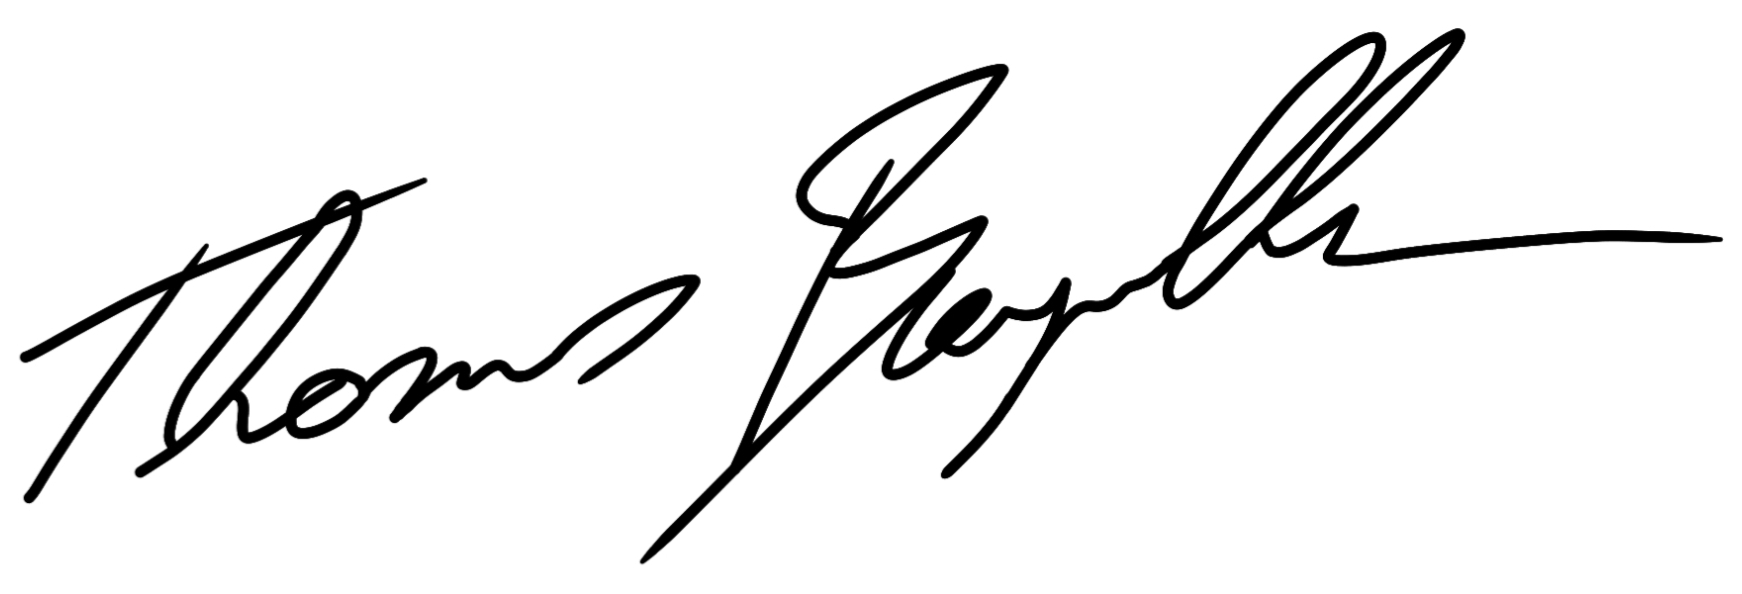 File:Thomas Bangalter signature.jpg - Wikipedia